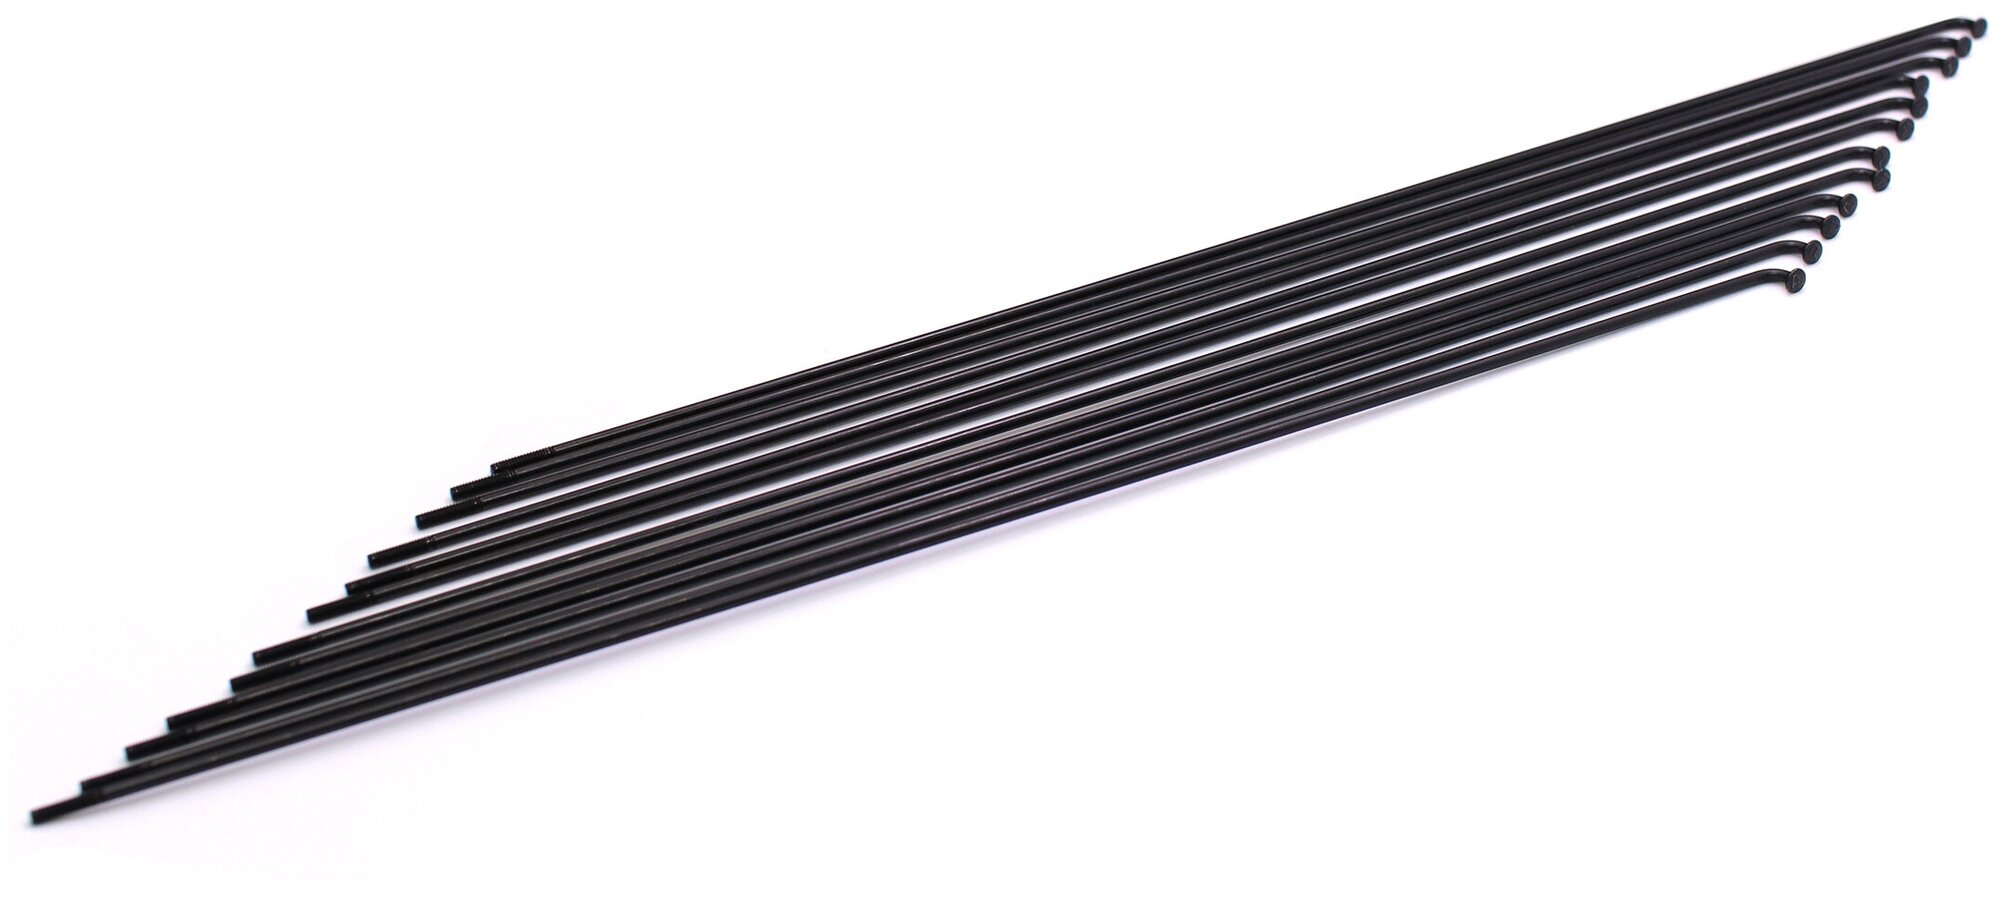 Спицы велосипедные Pillar Spoke PDB 1415 2-1.8-2 x 284 mm J-bend + Black oxide, 18 штук